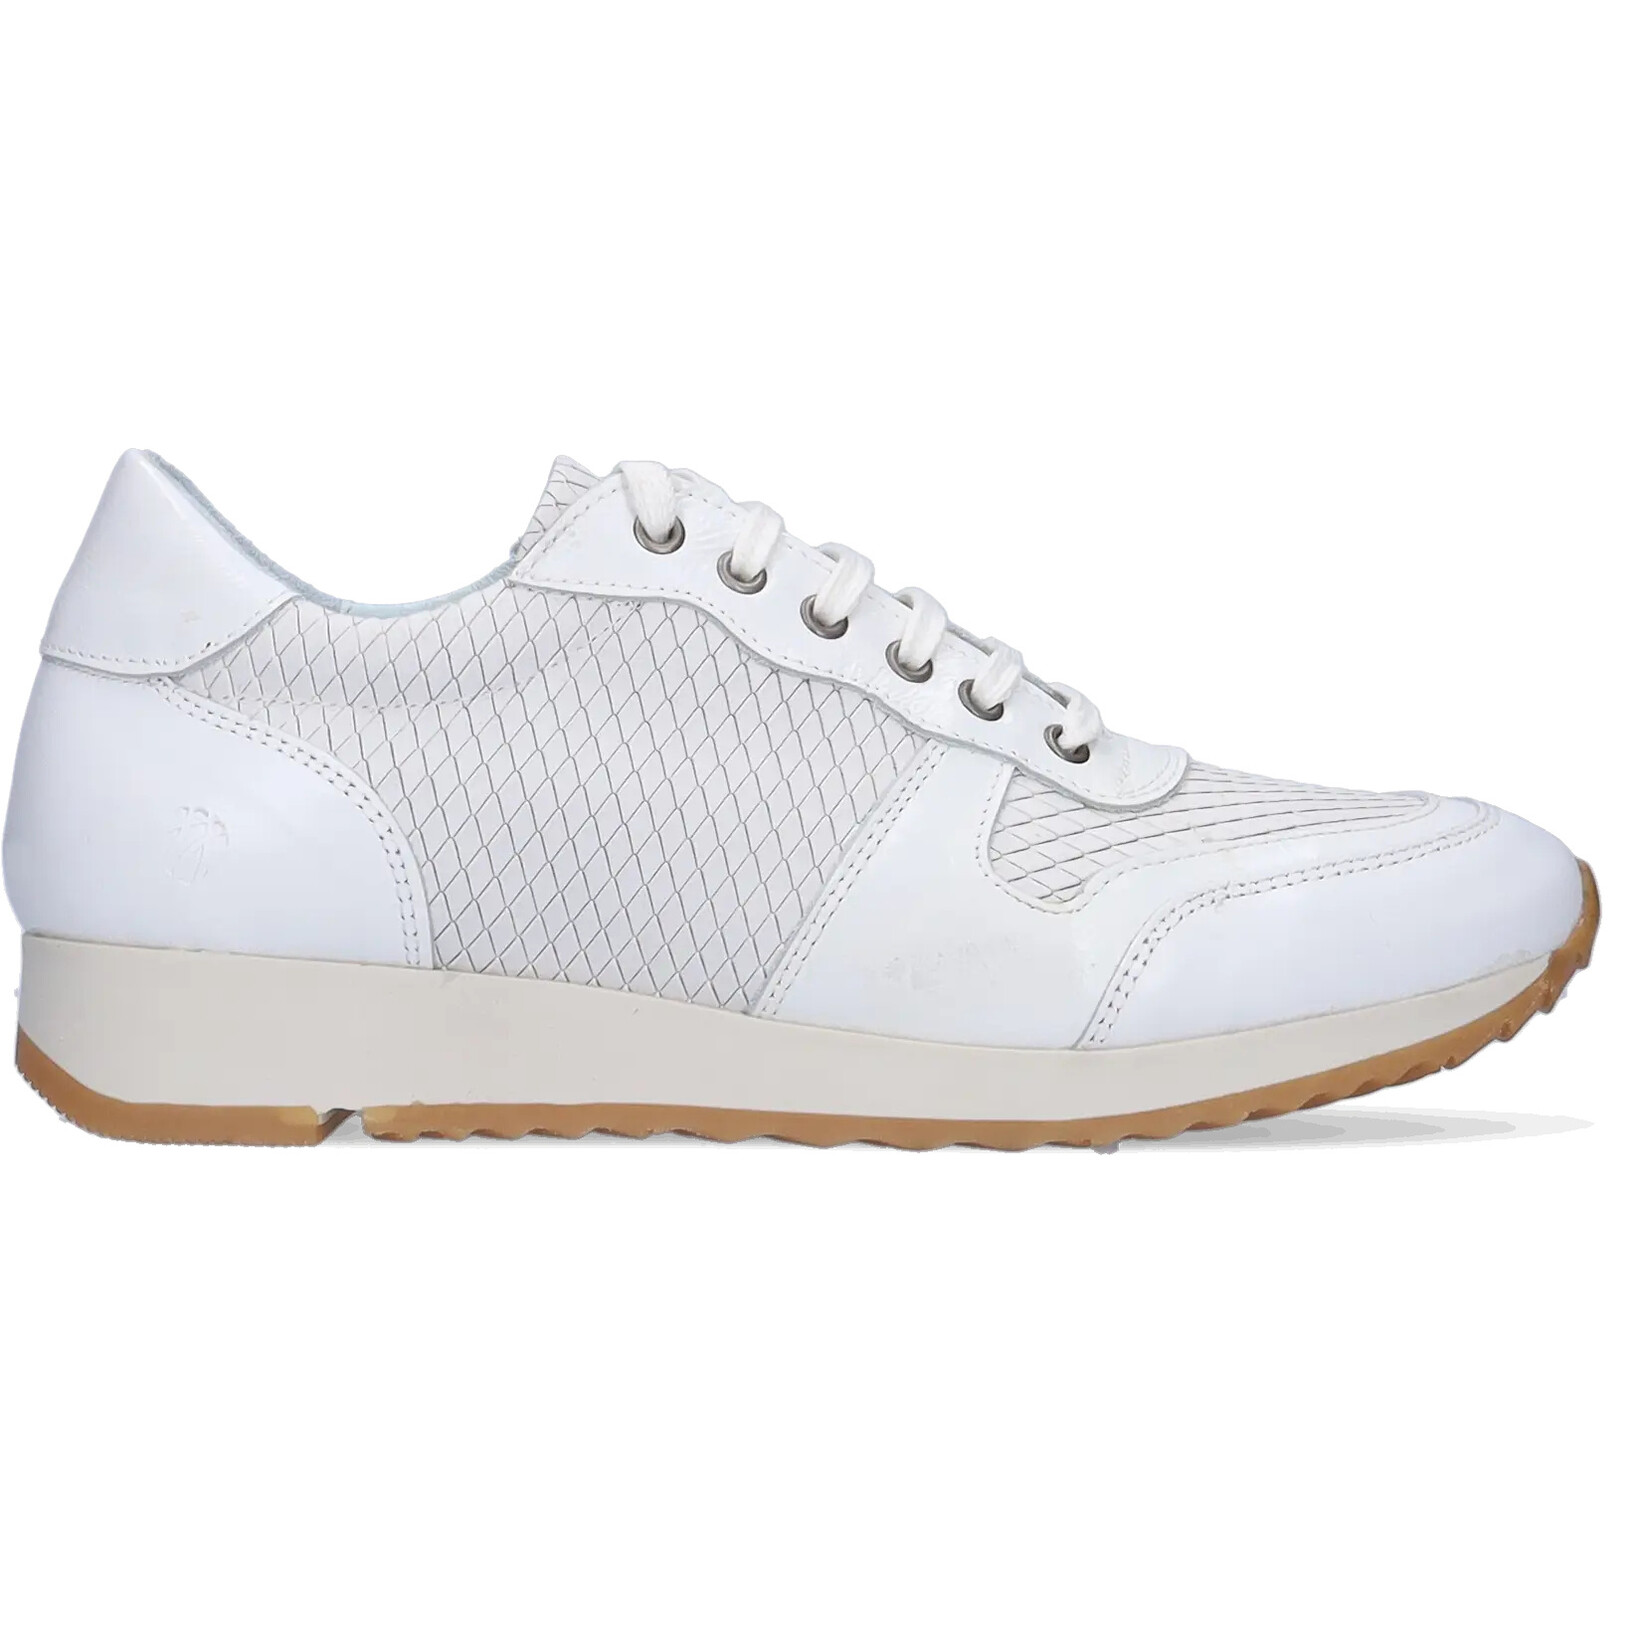 JJ Footwear Bermuda - White/Offwhite